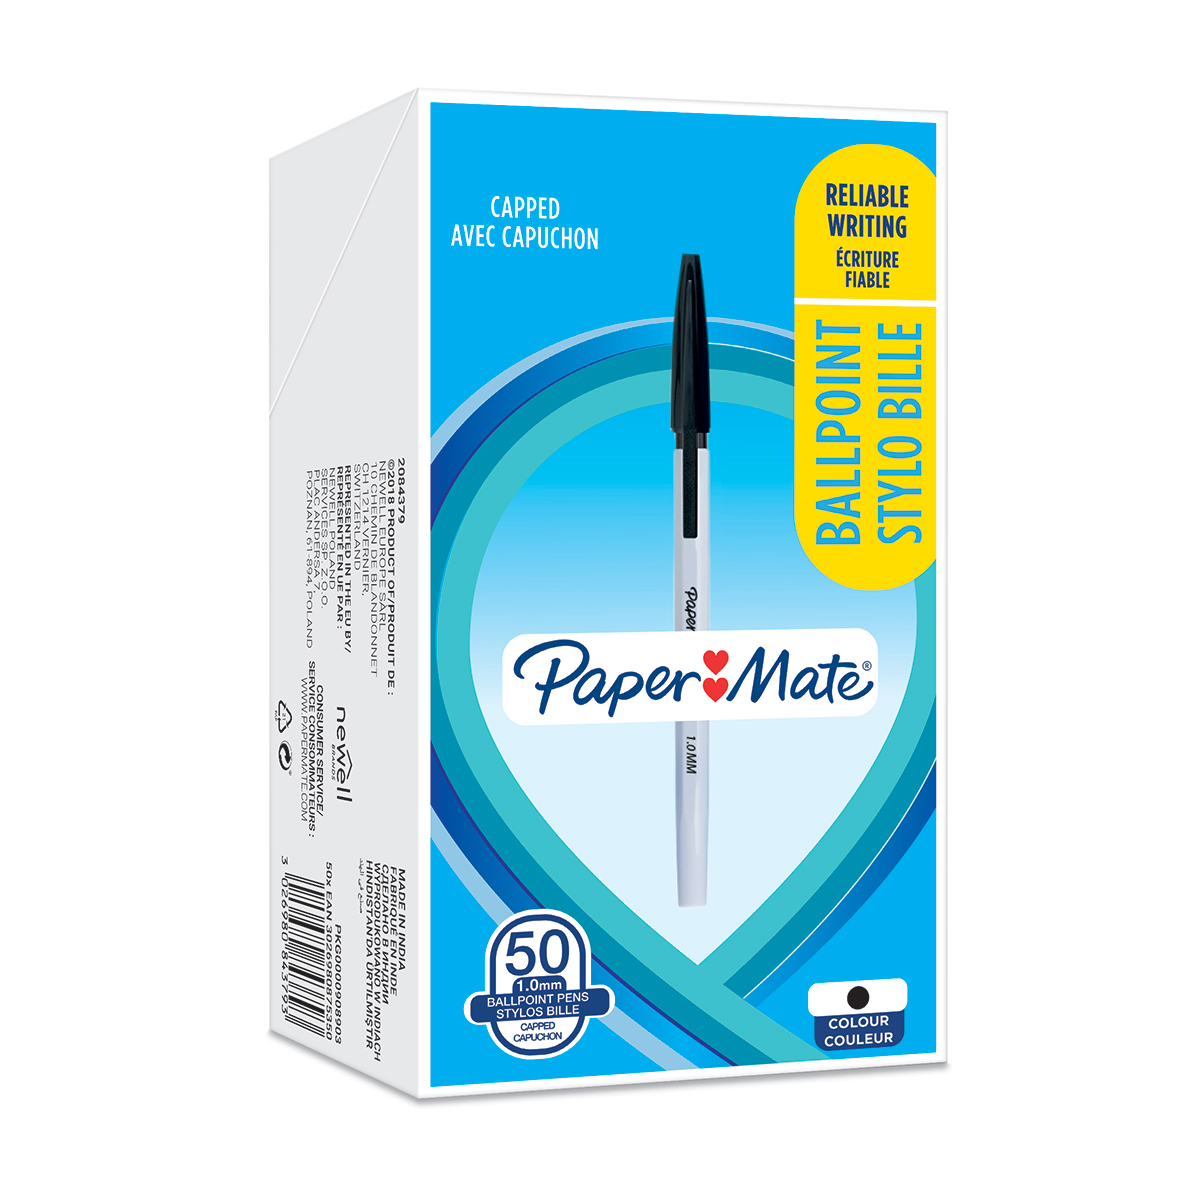 Paper Mate Stick Ballpoint Pen 1.0mm Tip 0.7mm Line Black (Pack 50)